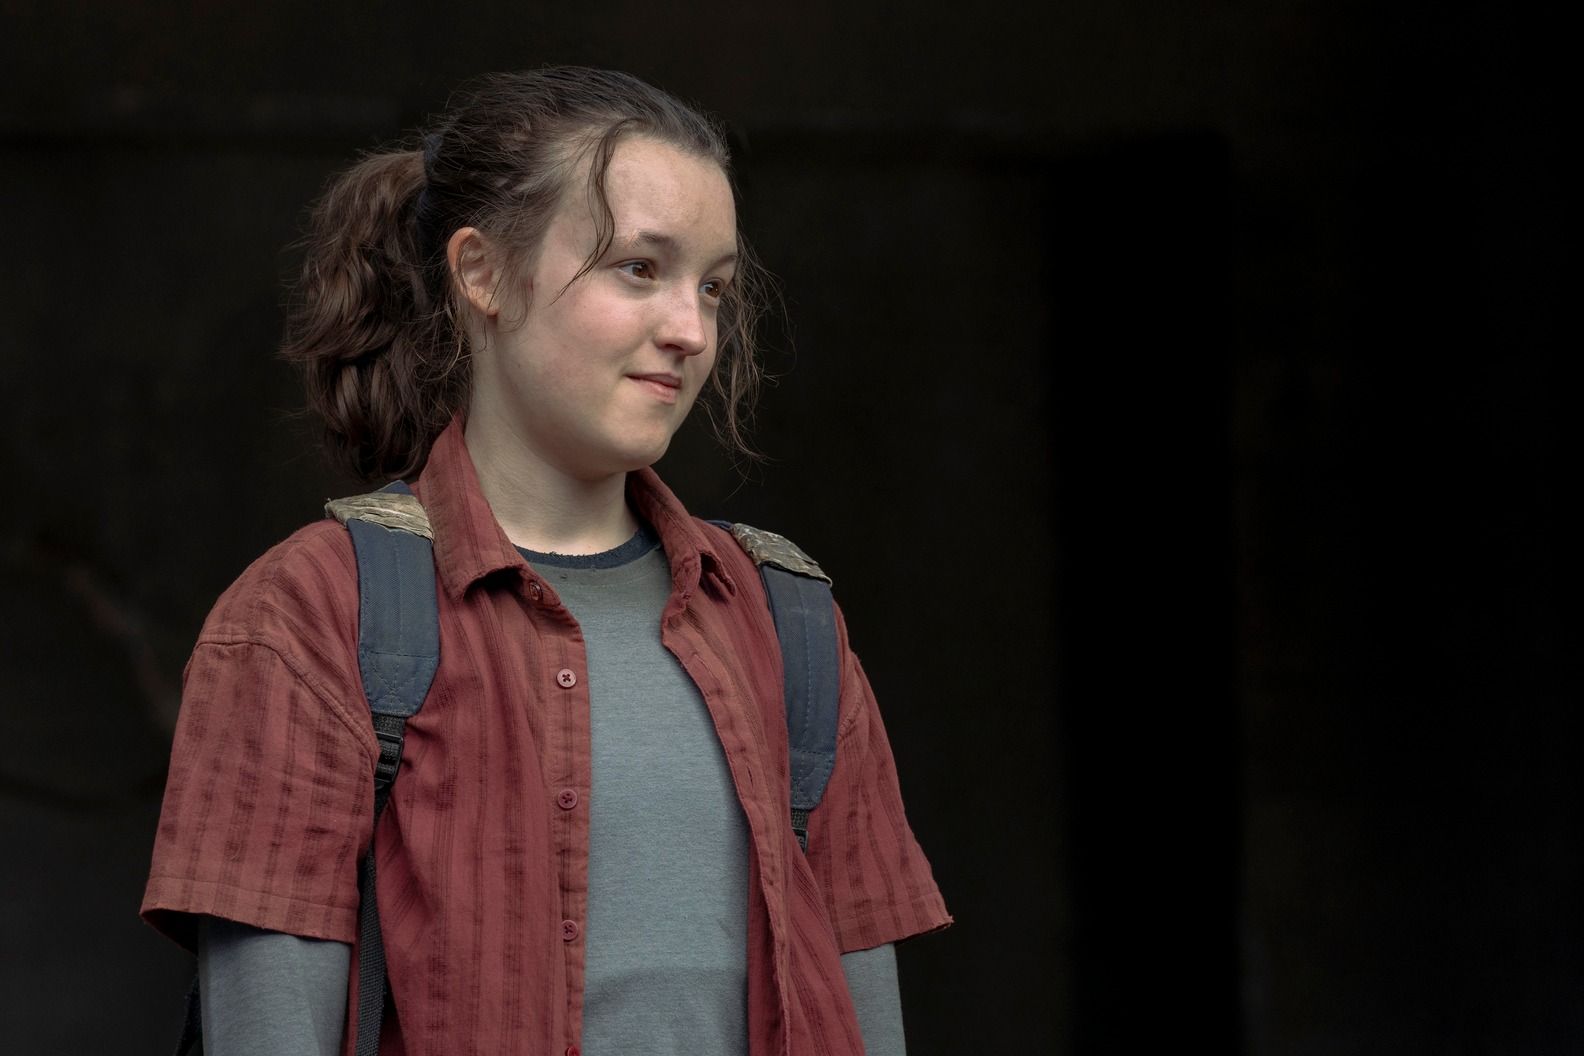 The Last of Us' Season 1 Episode 9 Recap: What Happened?